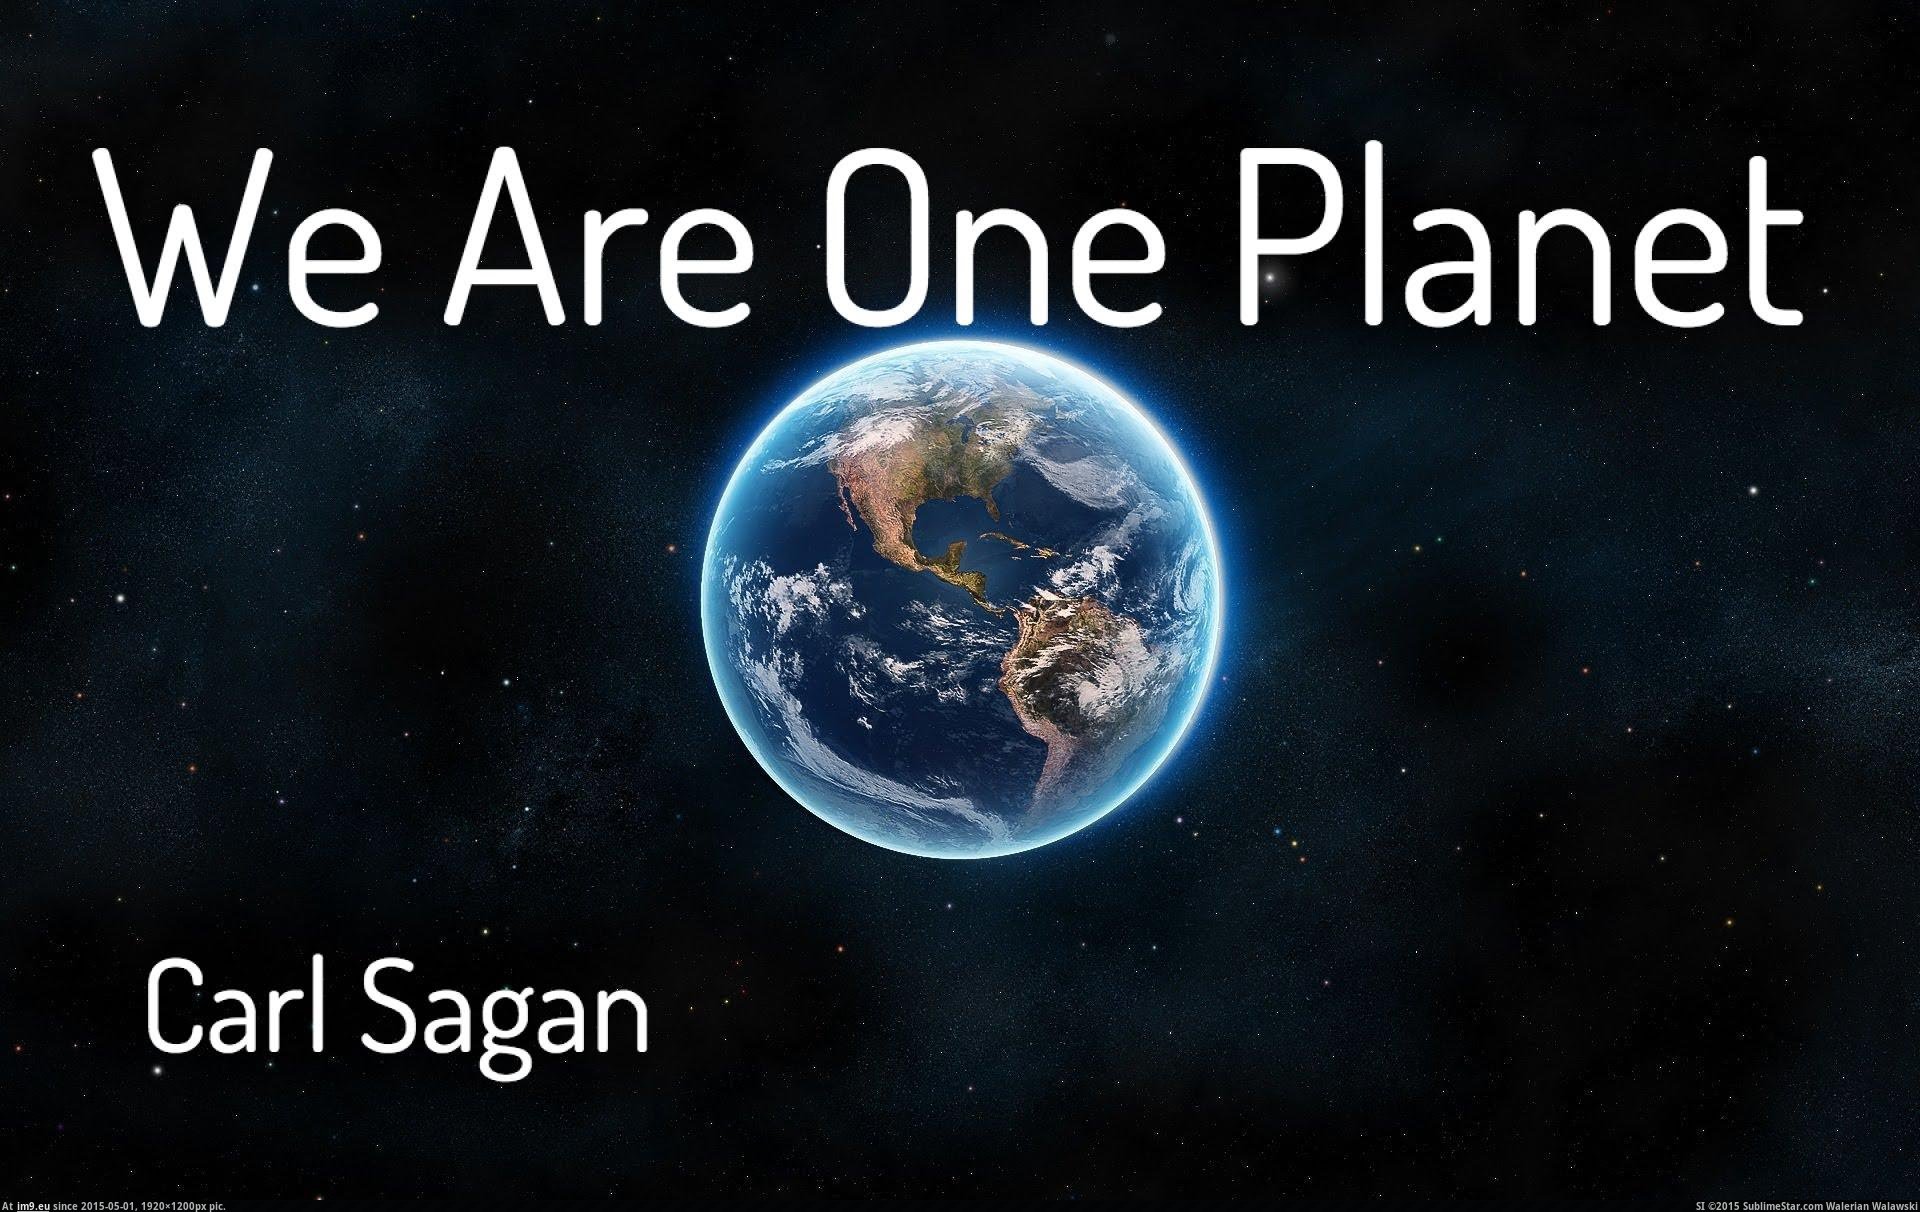 Alternative-News.tk - Carl Edward Sagan - was an American astronomer, astrophysicist, cosmologist, author